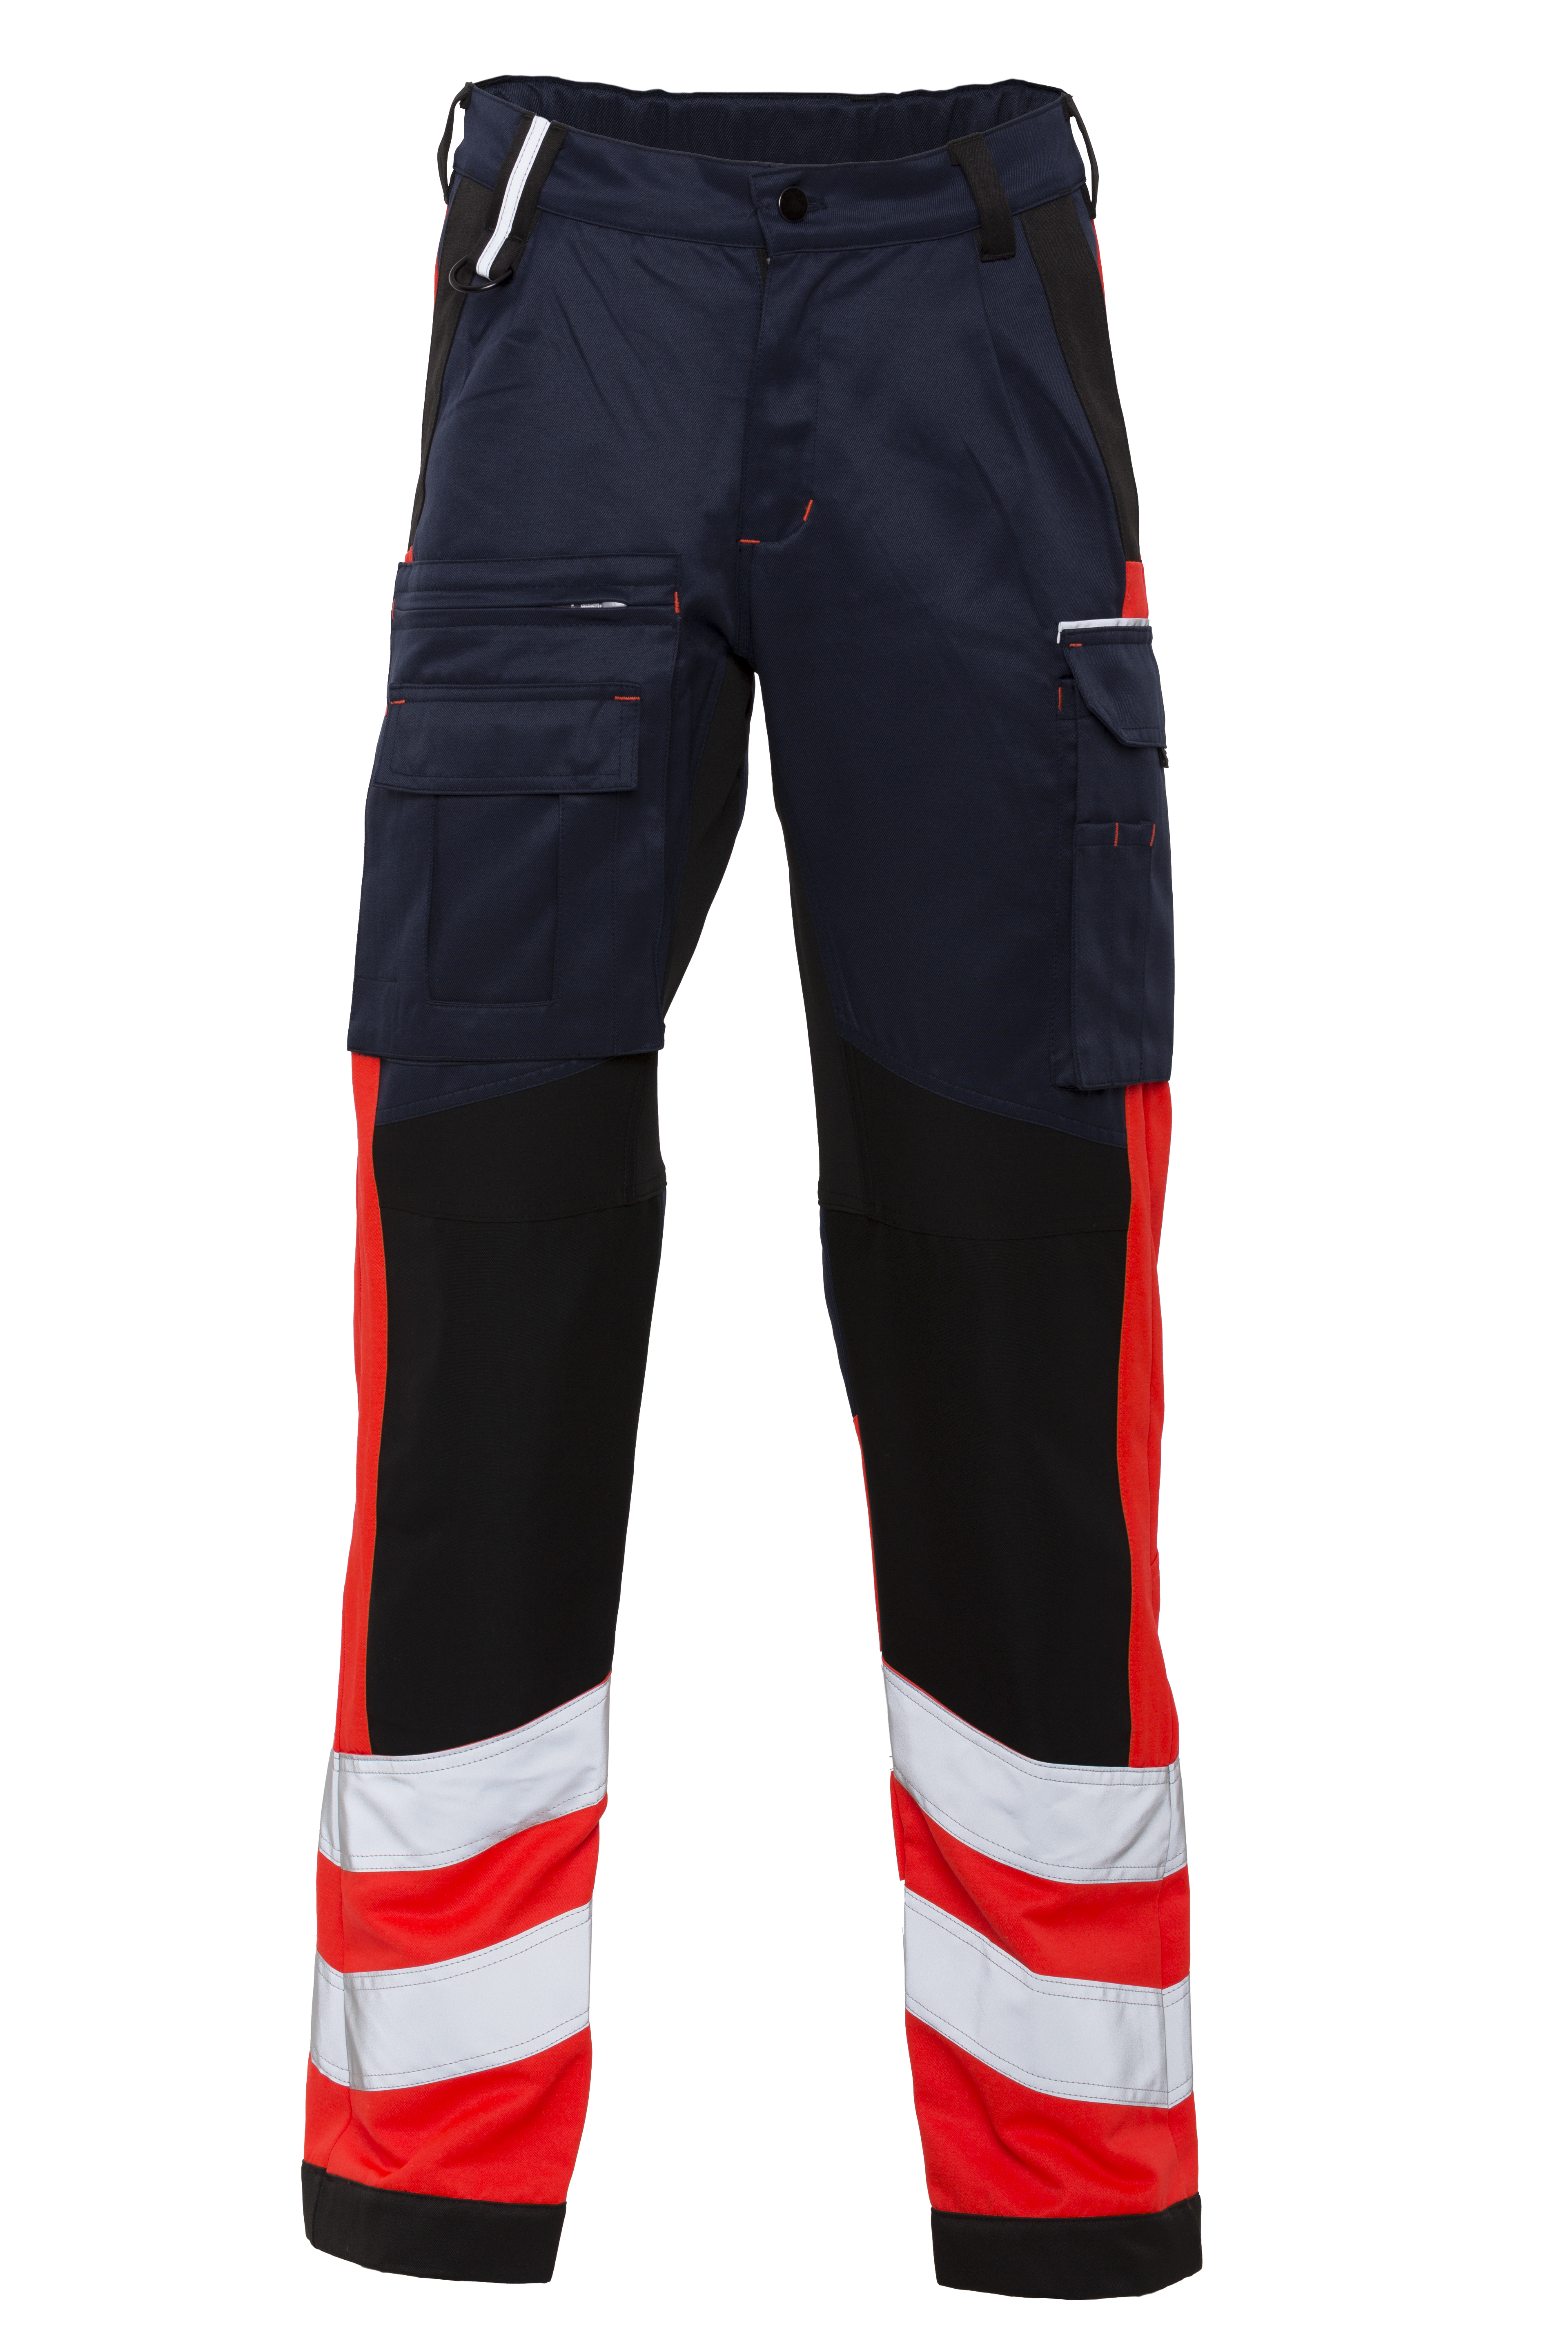 Rescuewear Unisex Hose Stretch HiVis Klasse 1 Marieneblau / Schwarz / Neon Rot"